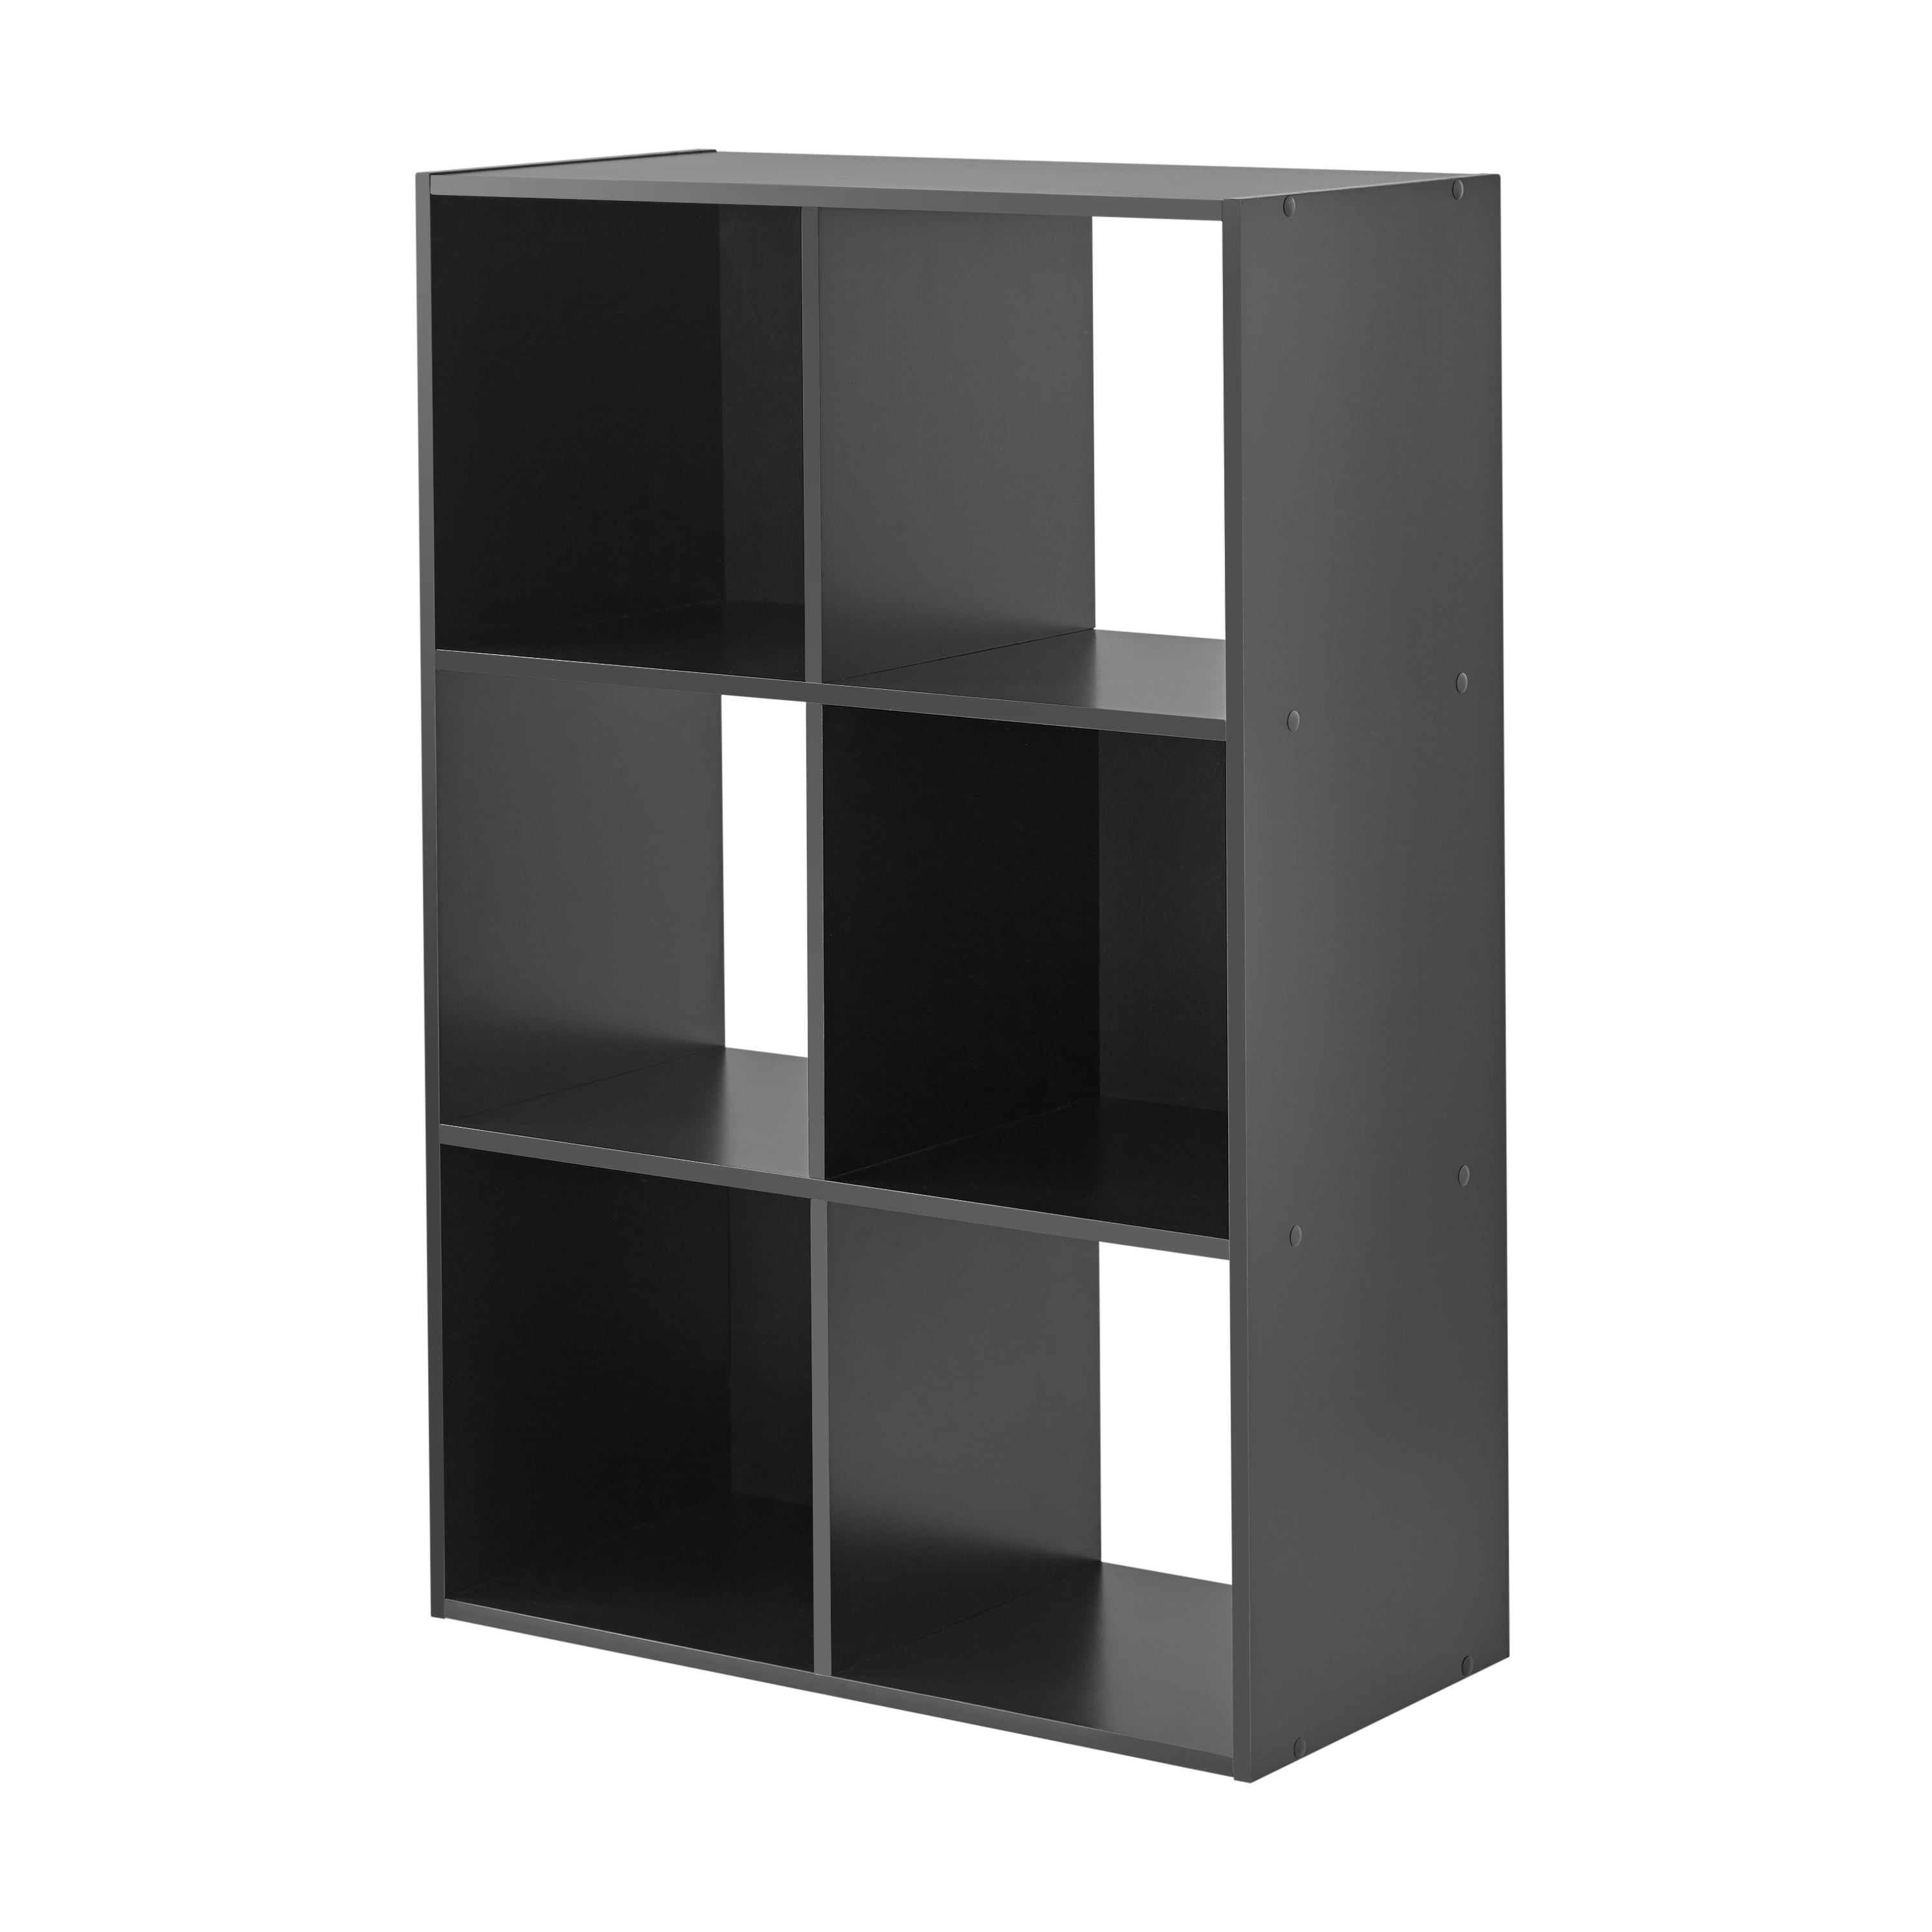 Mainstays 6 Cube Storage Organizer, Black Cube Bookcase